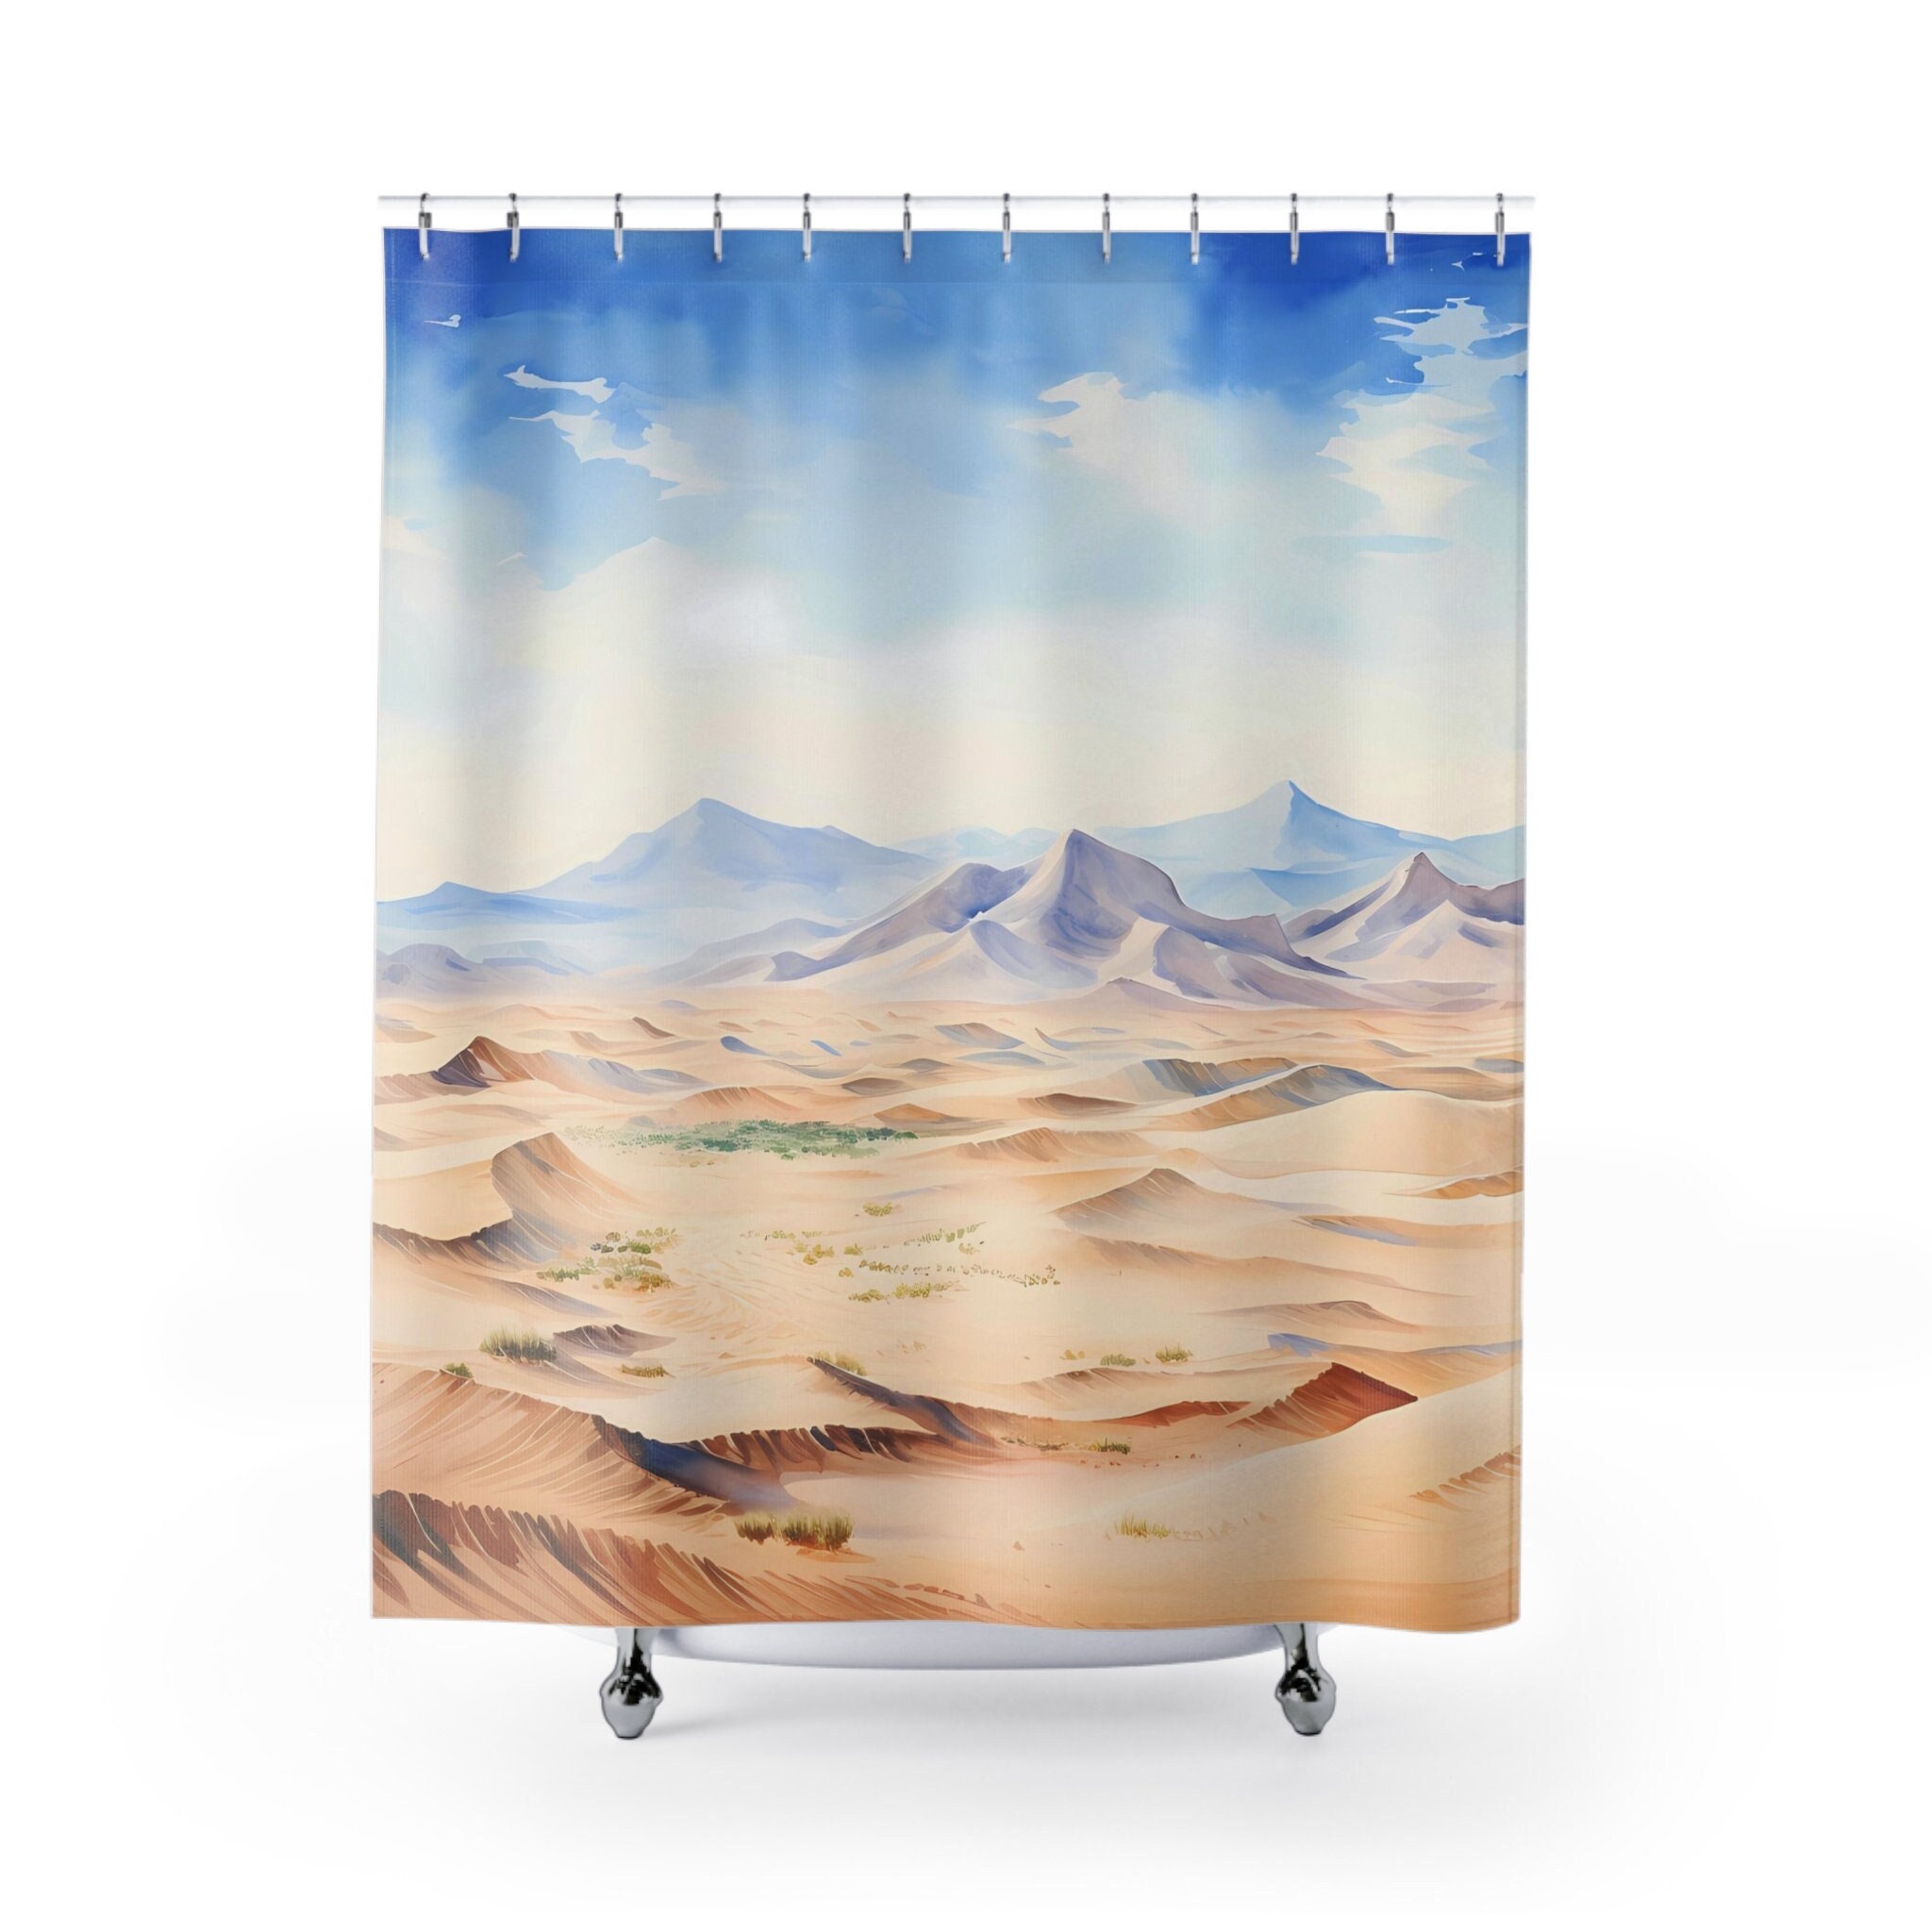 Desert Sand Dunes Nature Scenery Landscape Shower Curtains